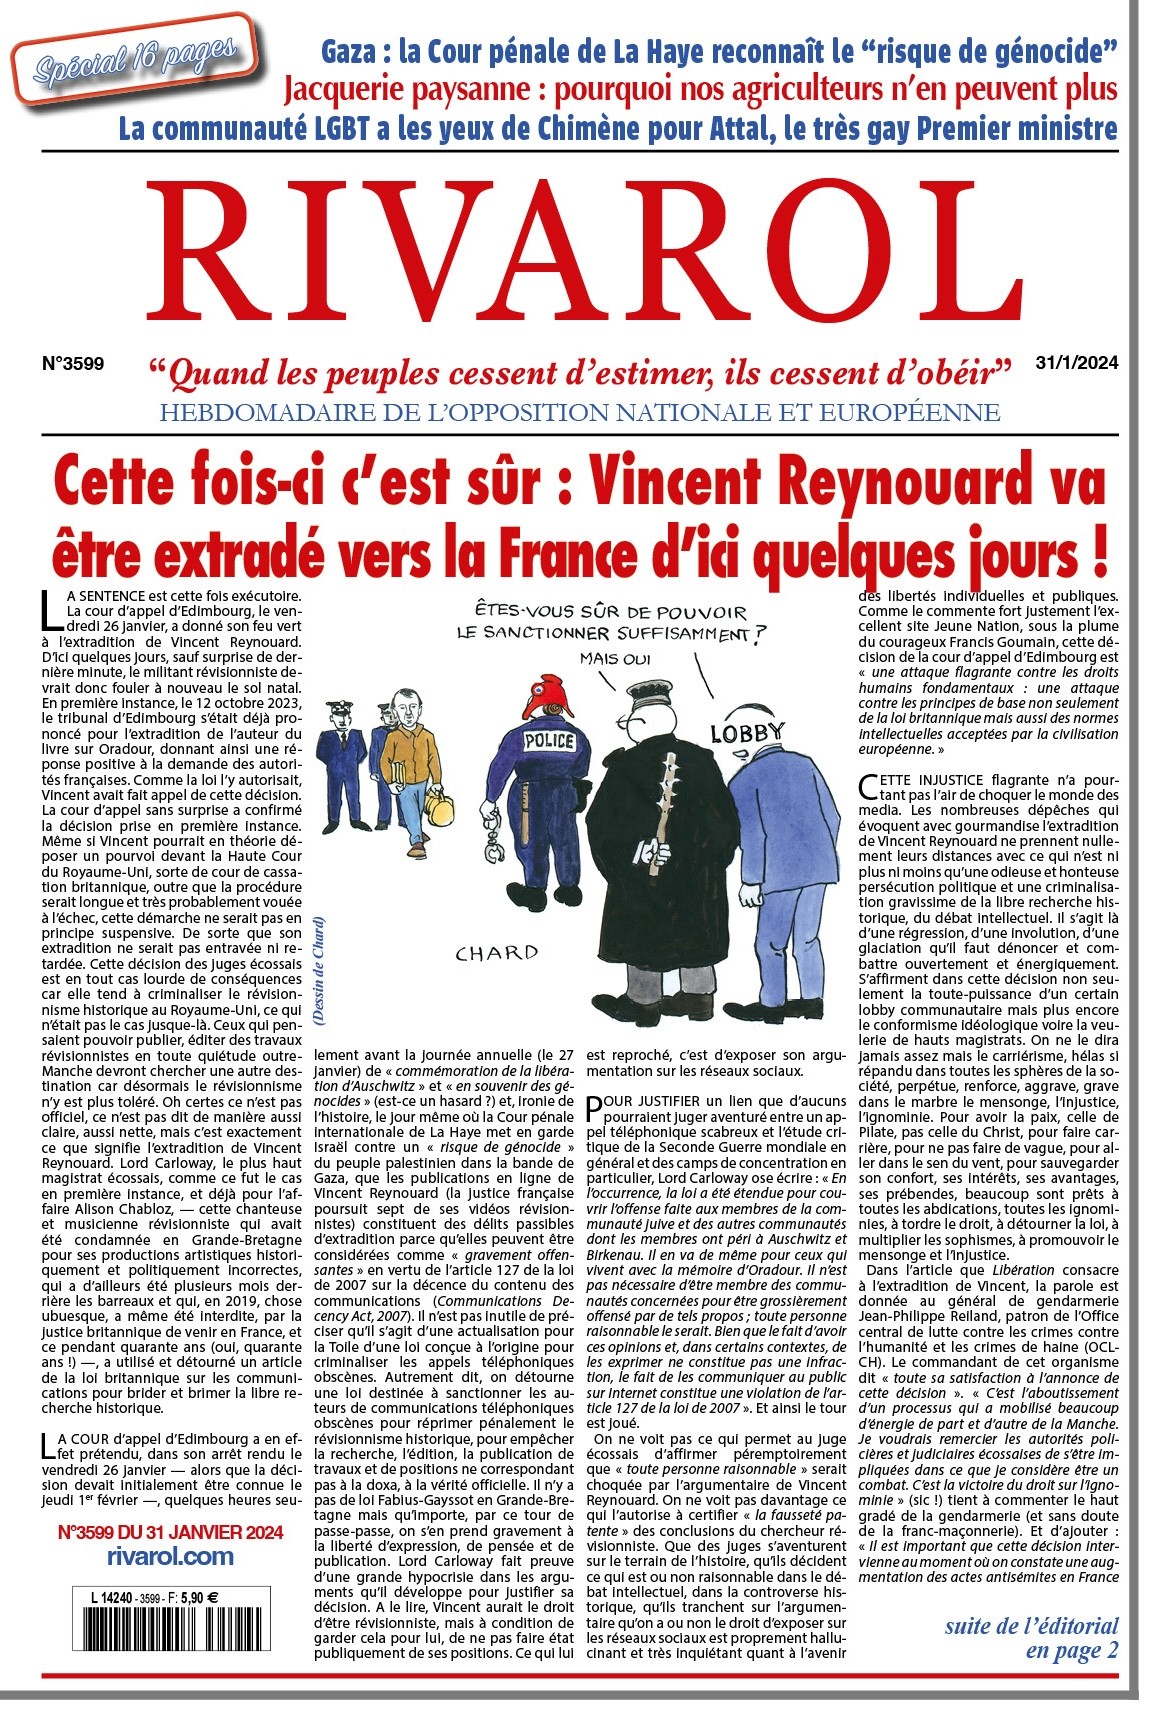 Rivarol n°3599 du 31/1/2024